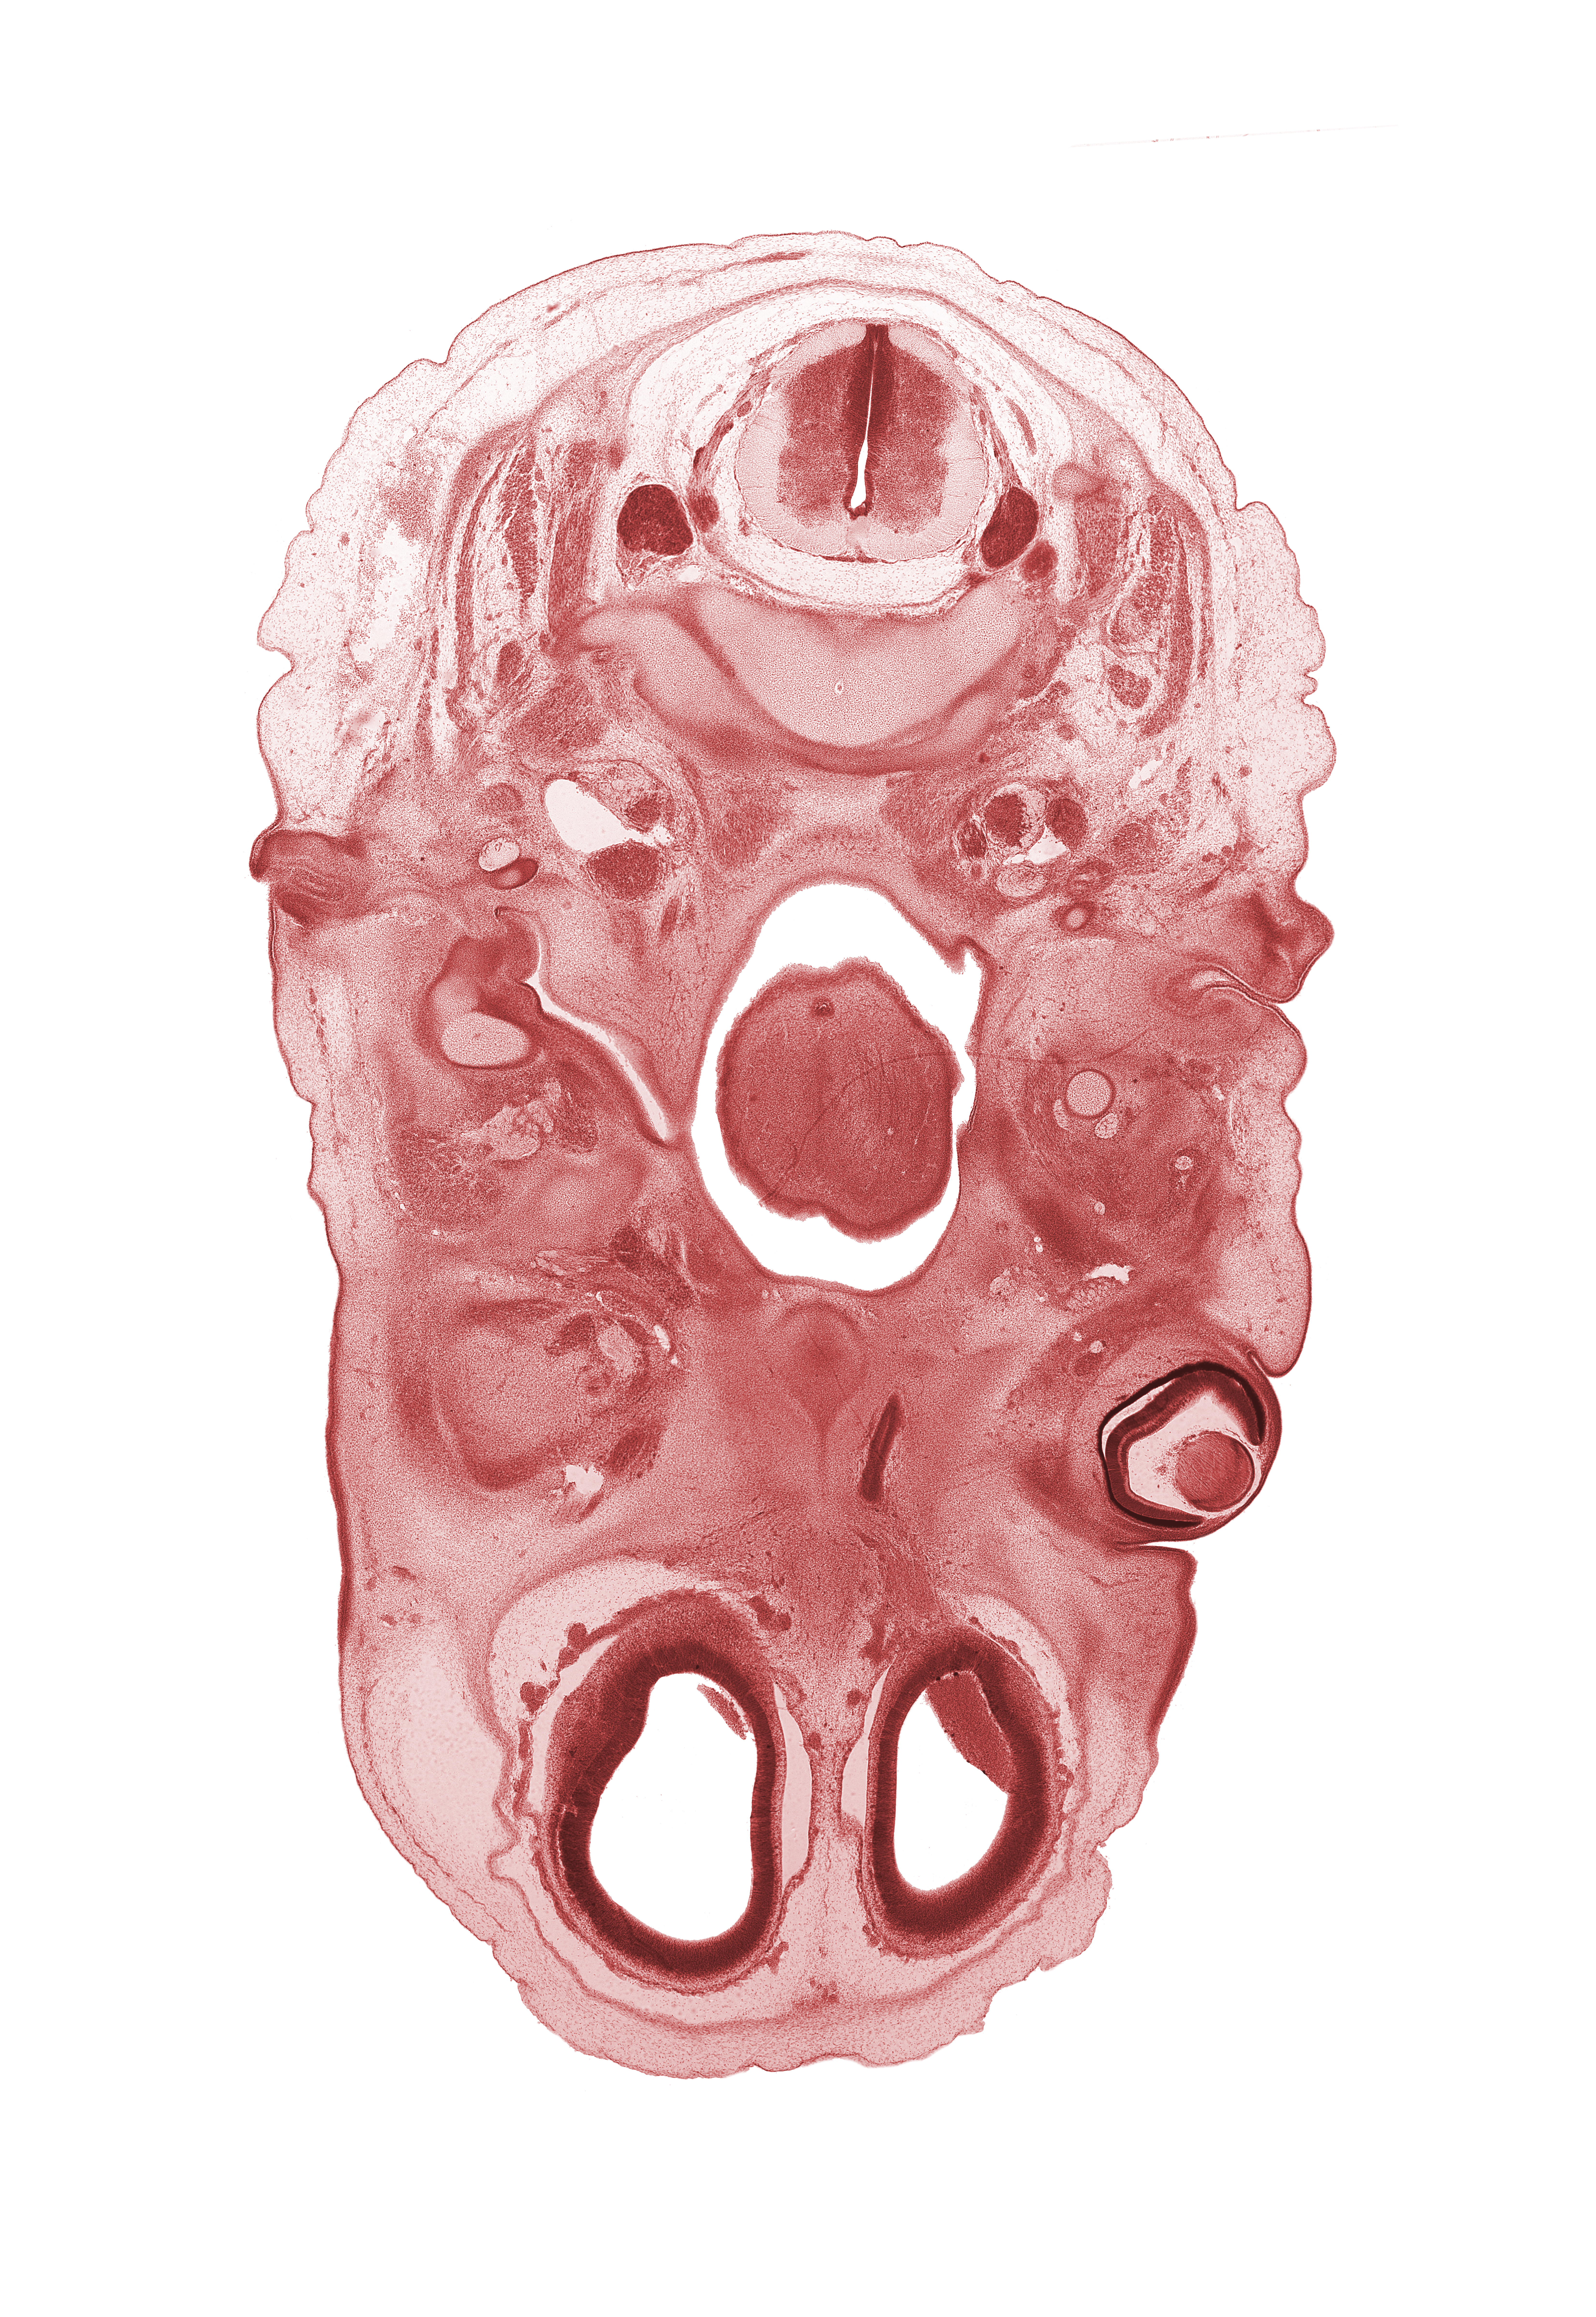 C-2 spinal ganglion, C-3 spinal ganglion, artifact separation(s), atlanto-axial joint, blastema of extra-ocular muscle(s), centrum of C-2 vertebra (axis), cornea, dorsum of tongue, edge of nasal ectoderm, glossopharyngeal nerve (CN IX), inferior ganglion of vagus nerve (CN X), internal jugular vein, lateral ventricle, lens, lower eyelid, nasopharynx, olfactory filia (CN I), oral cavity, oropharynx, pharyngeal arch 1 cartilage (Meckel), subarachnoid space, thyroglossal duct, upper eyelid